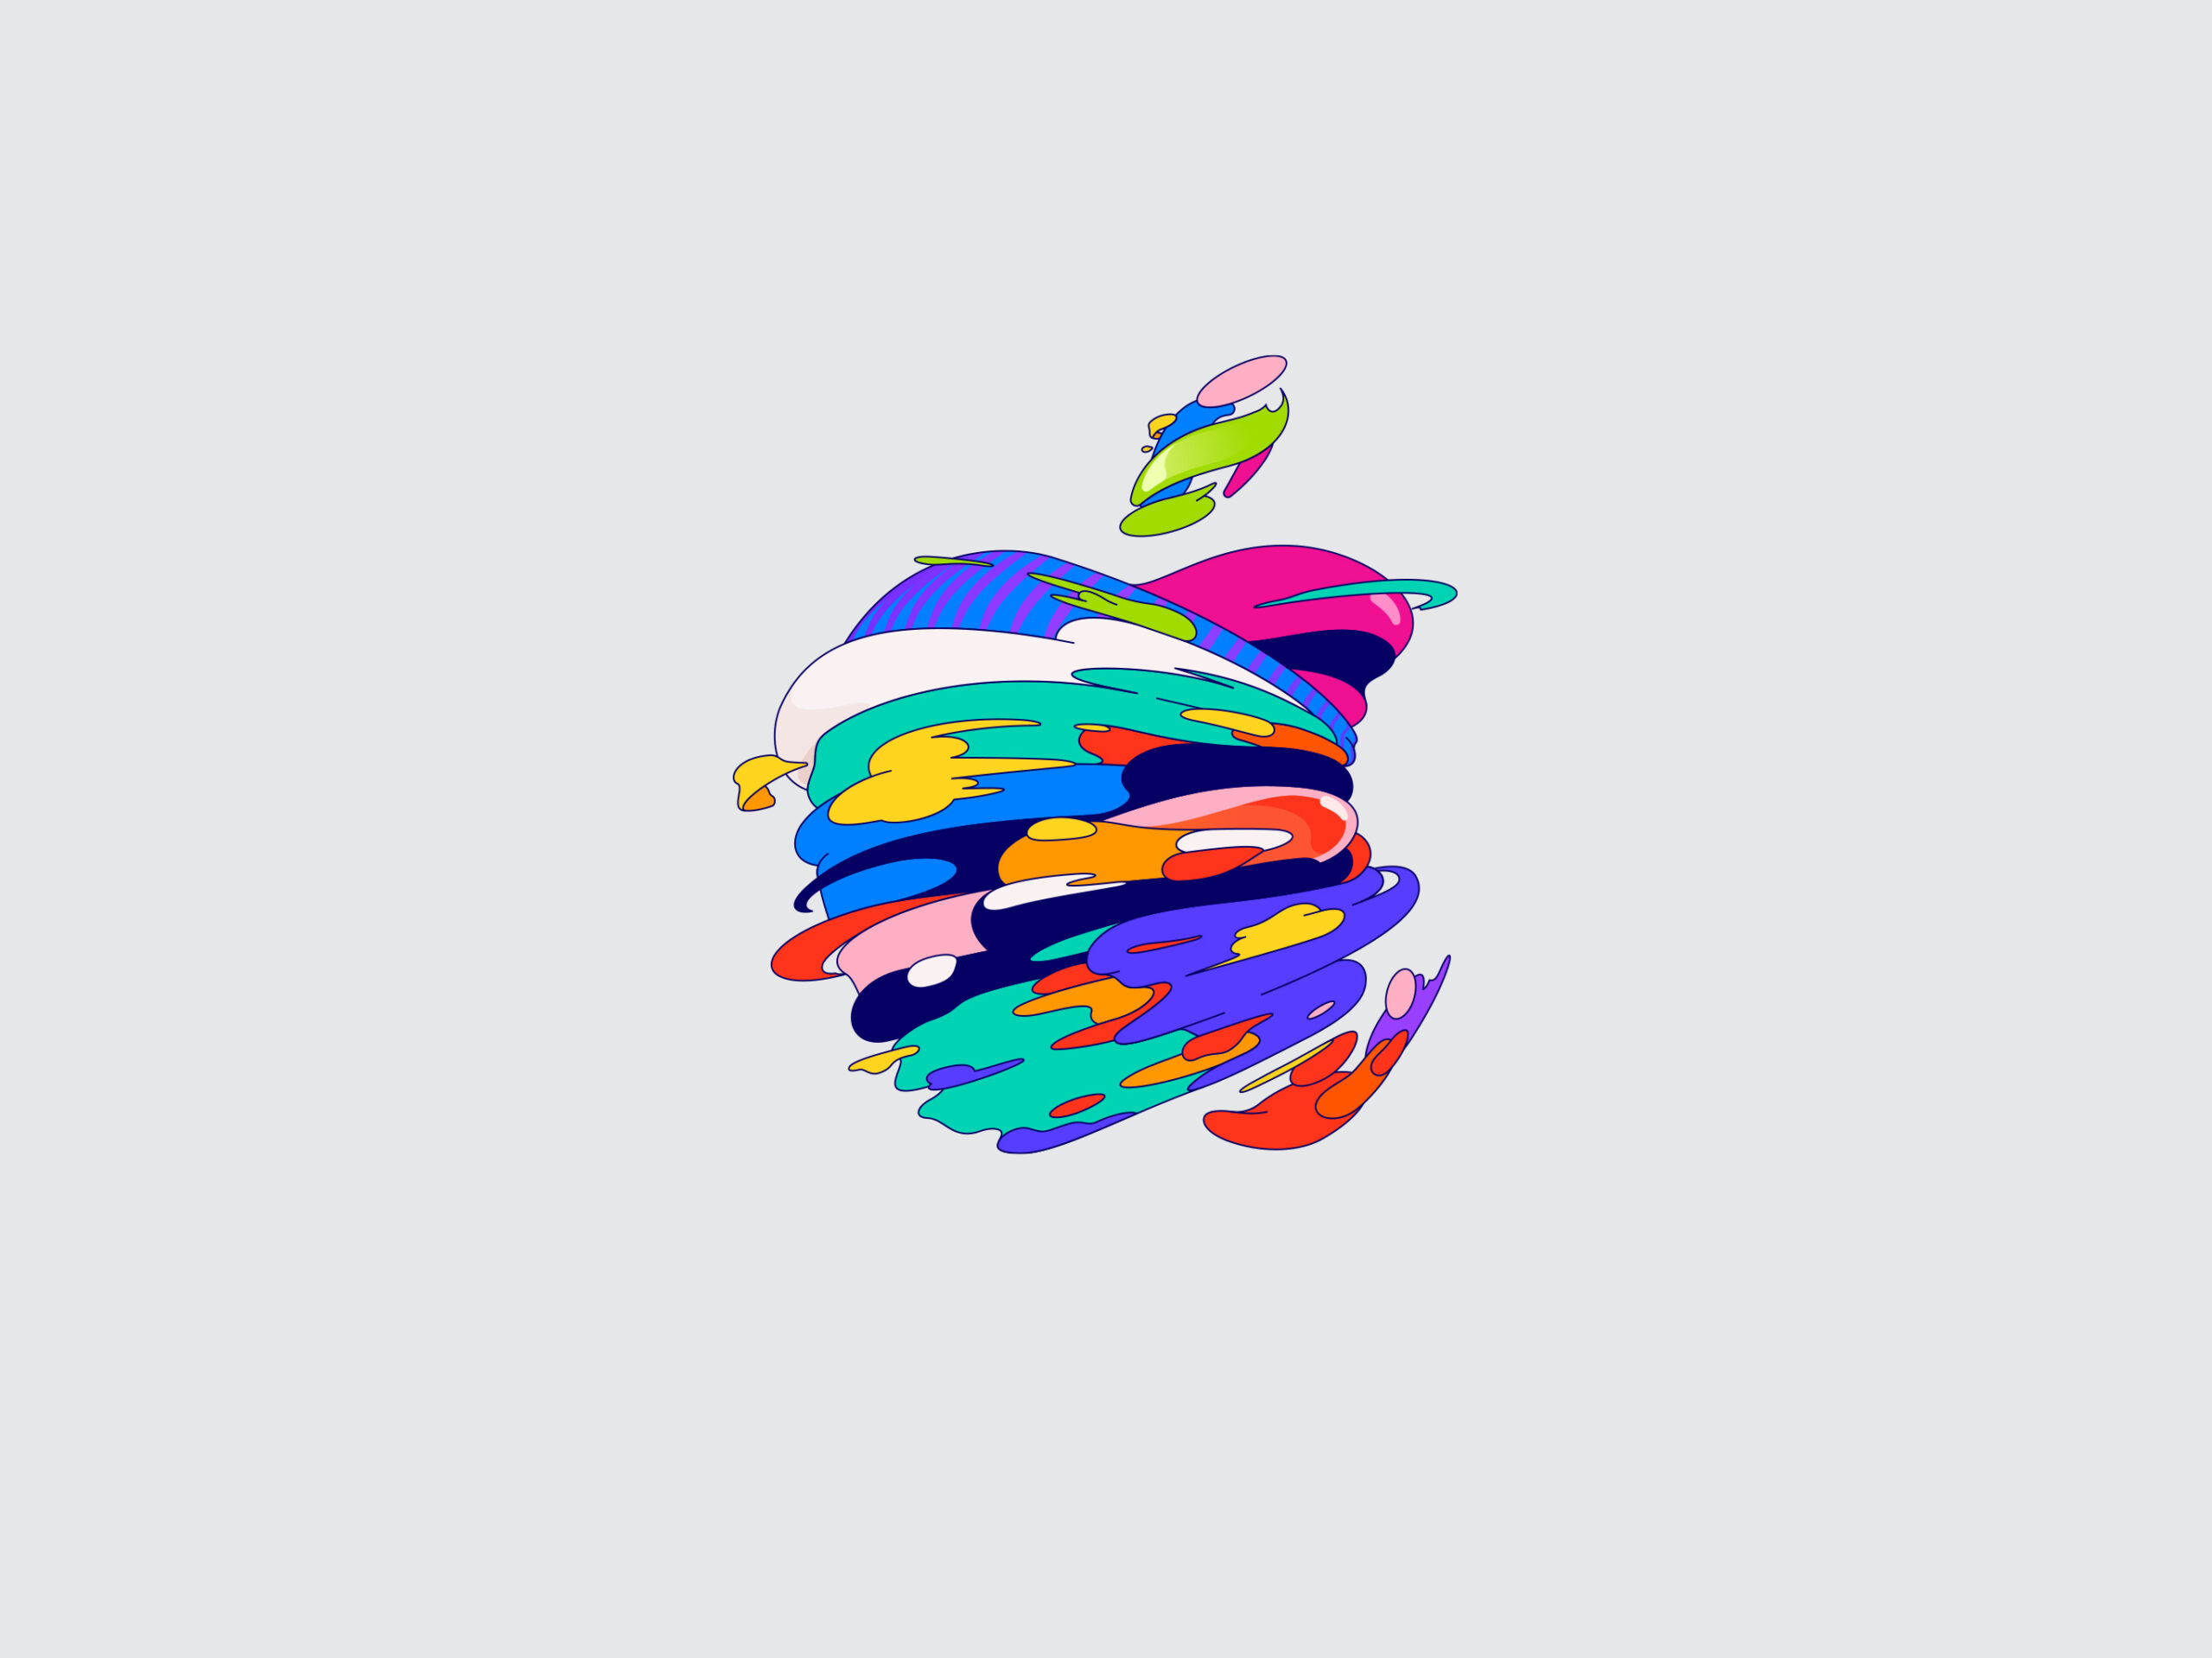 Wallpaper gray background and multi-colored bitten apple logo